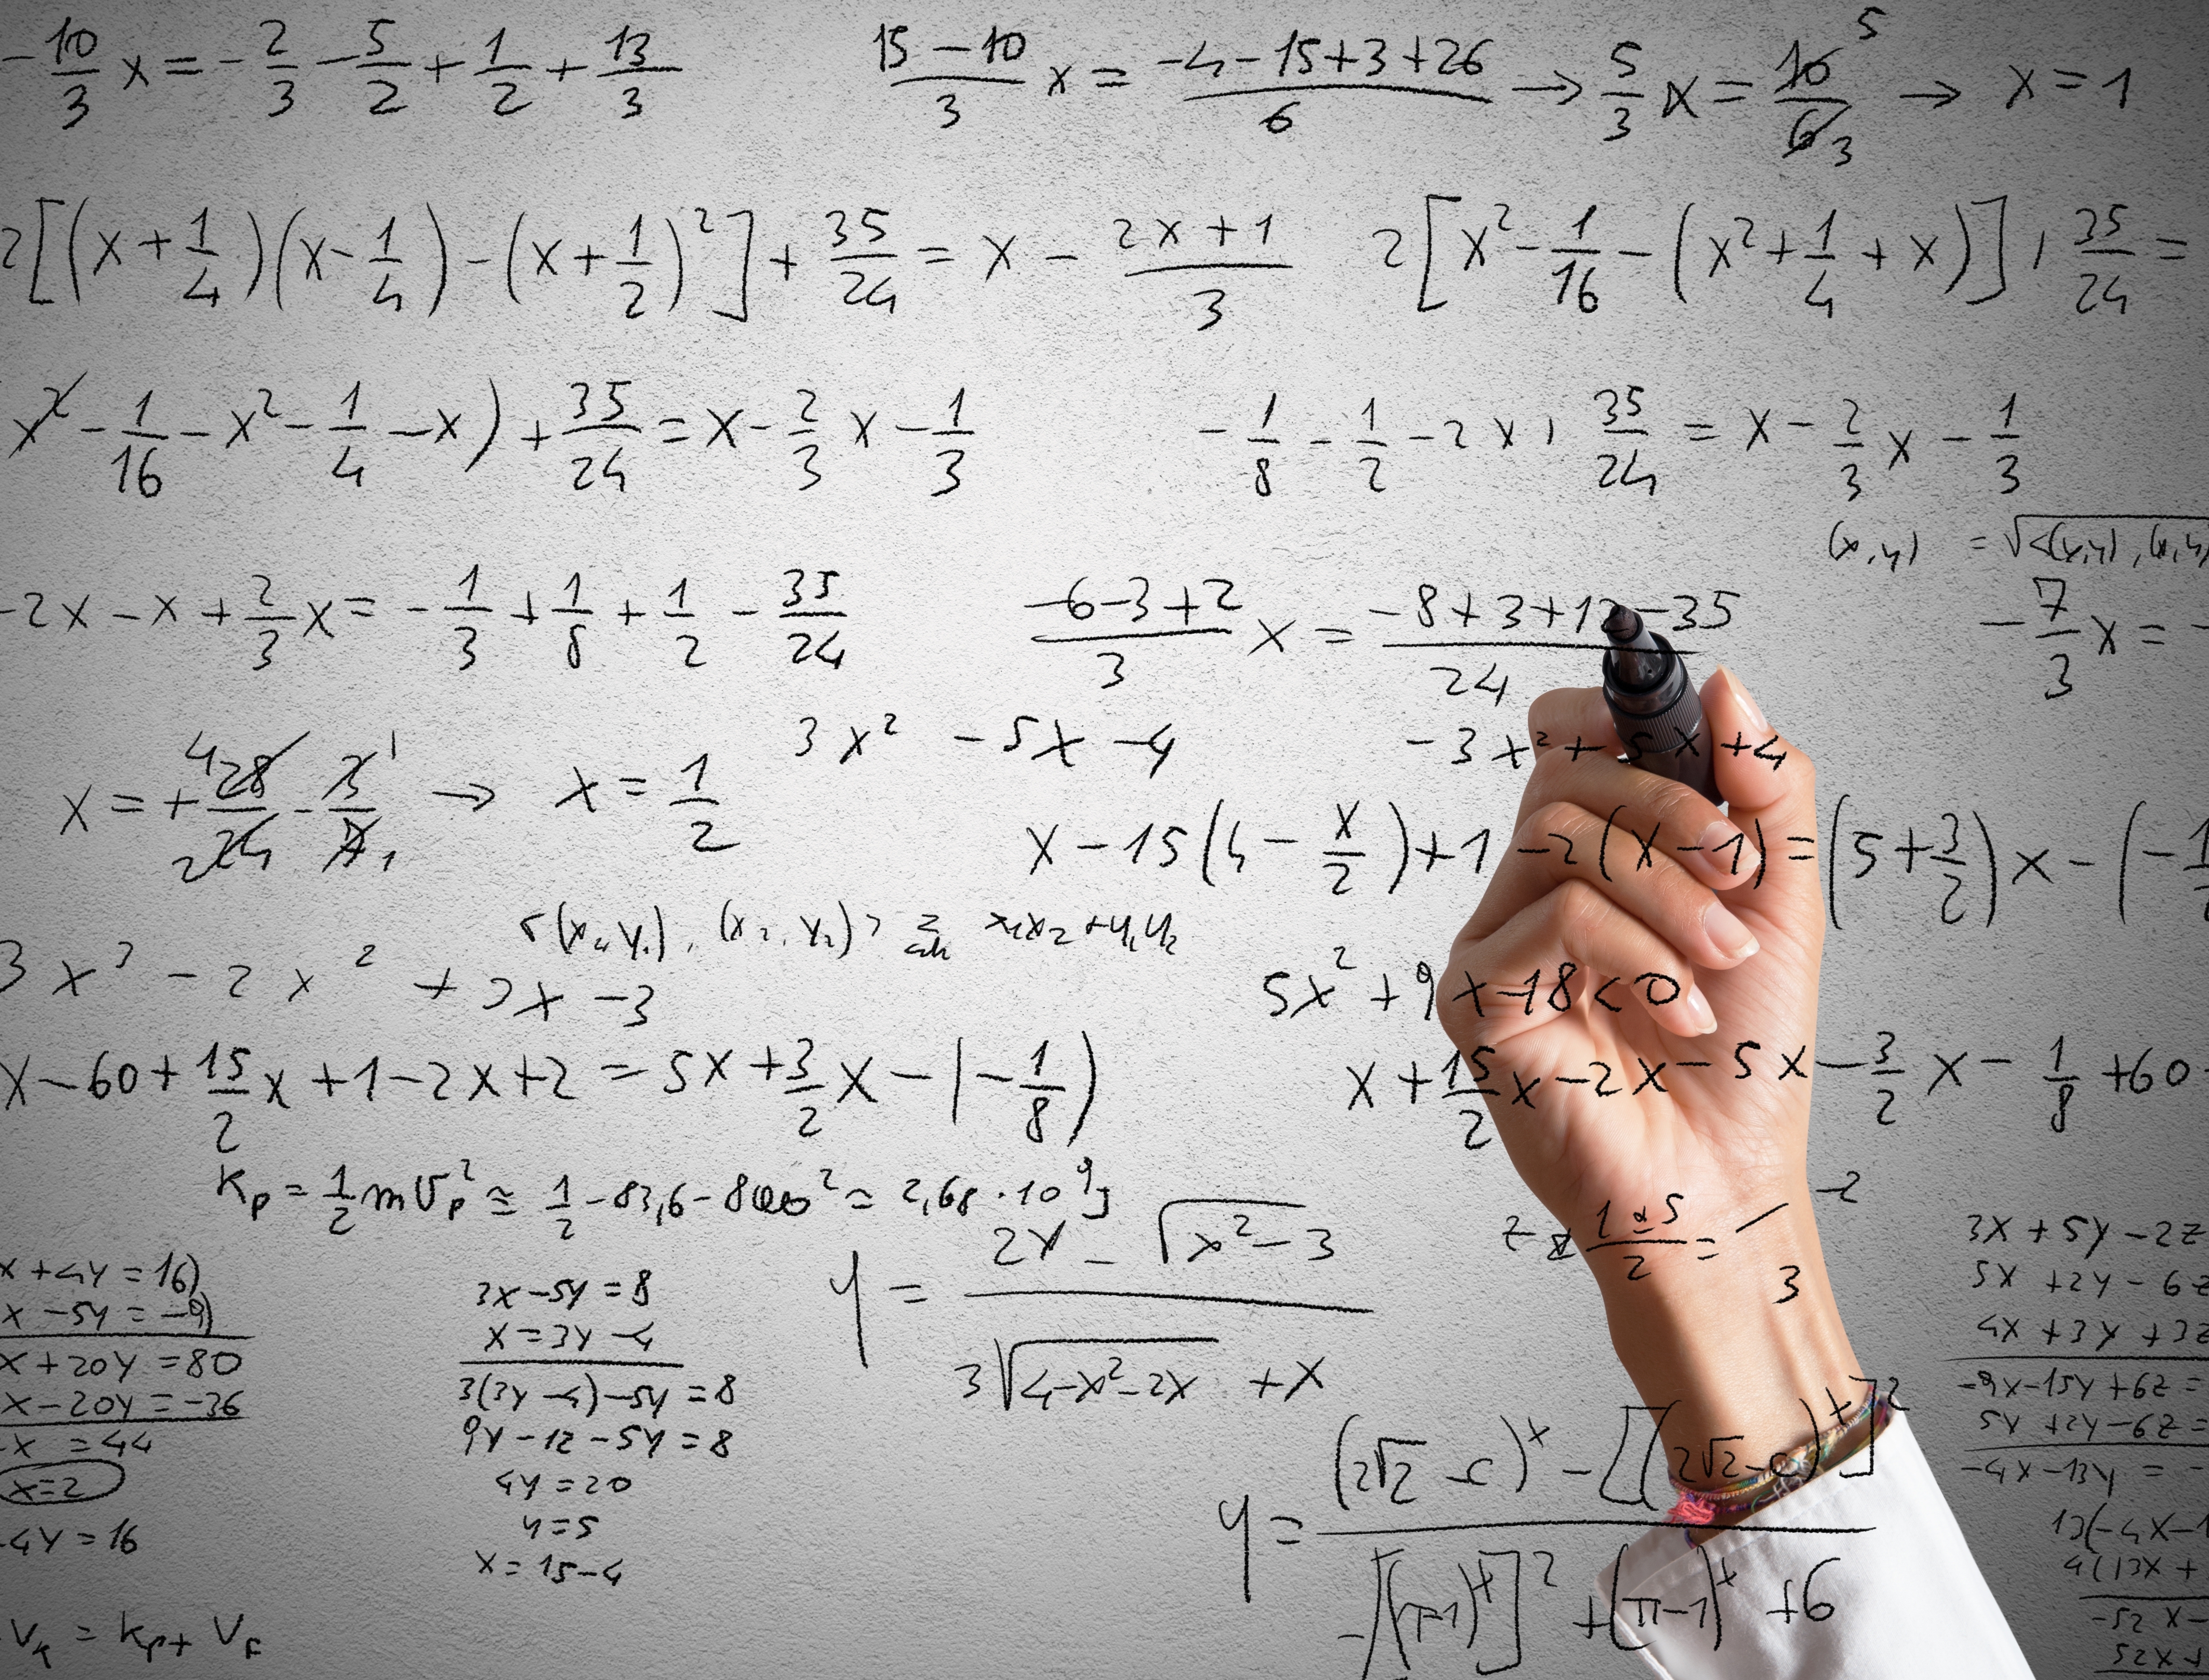 Engineers: Stop Doing Algebra by Hand!